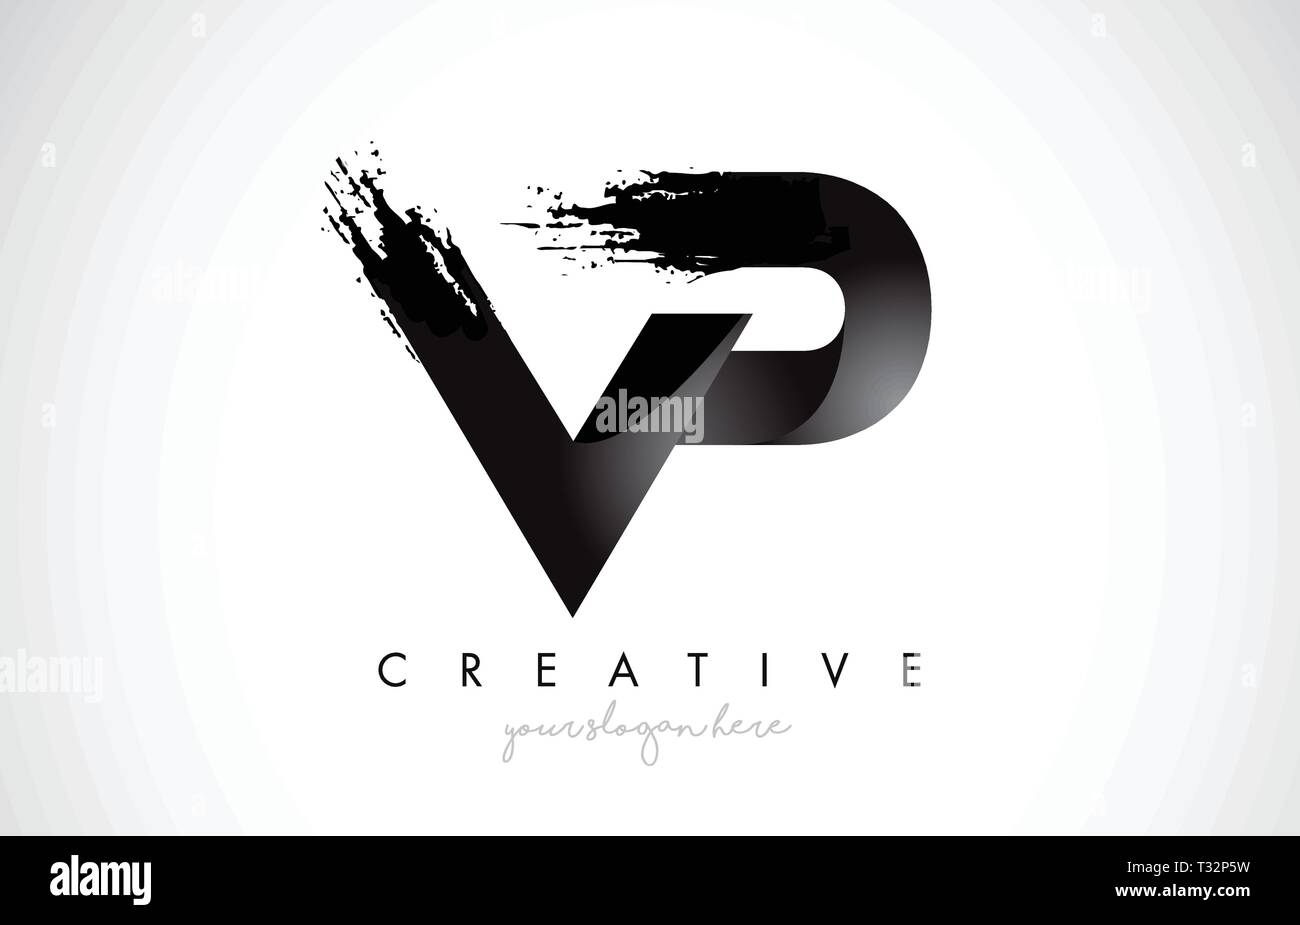 Vp Letter Design With Brush Stroke And Modern 3d Look Vector Illustration Stock Vector Image Art Alamy